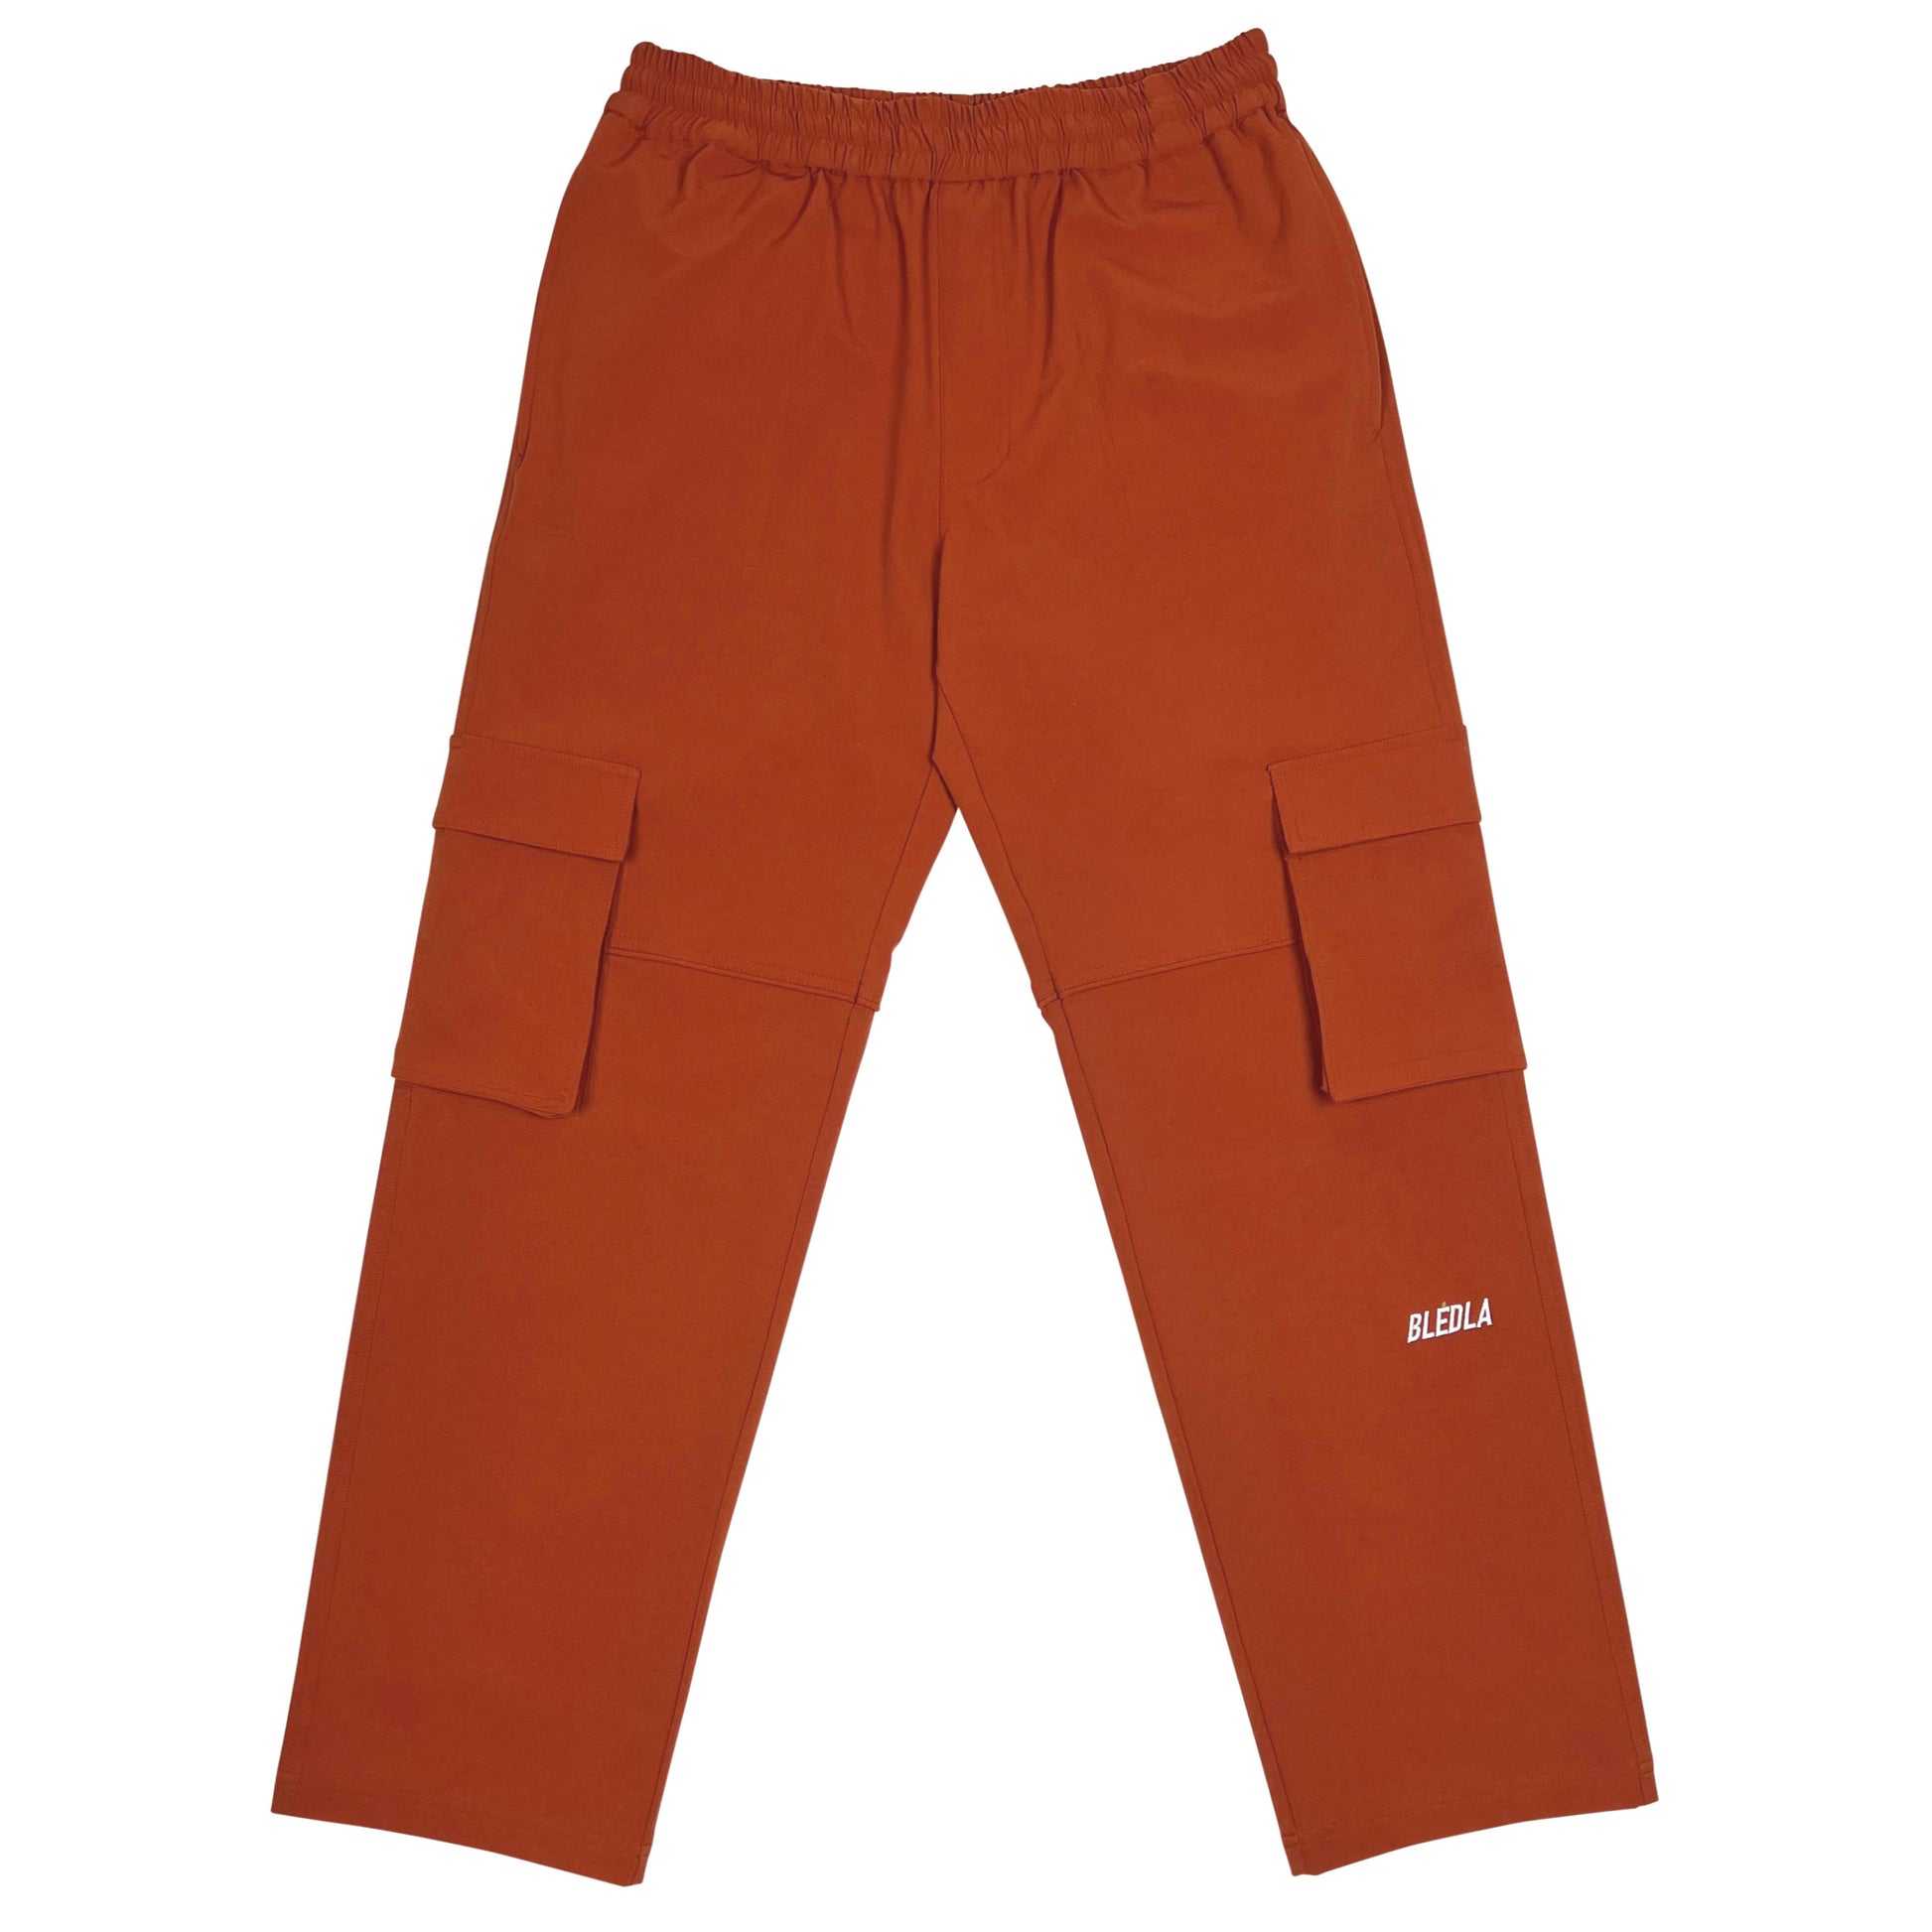 bledla-bled cargo pant-nylon cargo pant-burnt orange pant-burnt orange nylon pant-tech pant-utility tech cargo pants